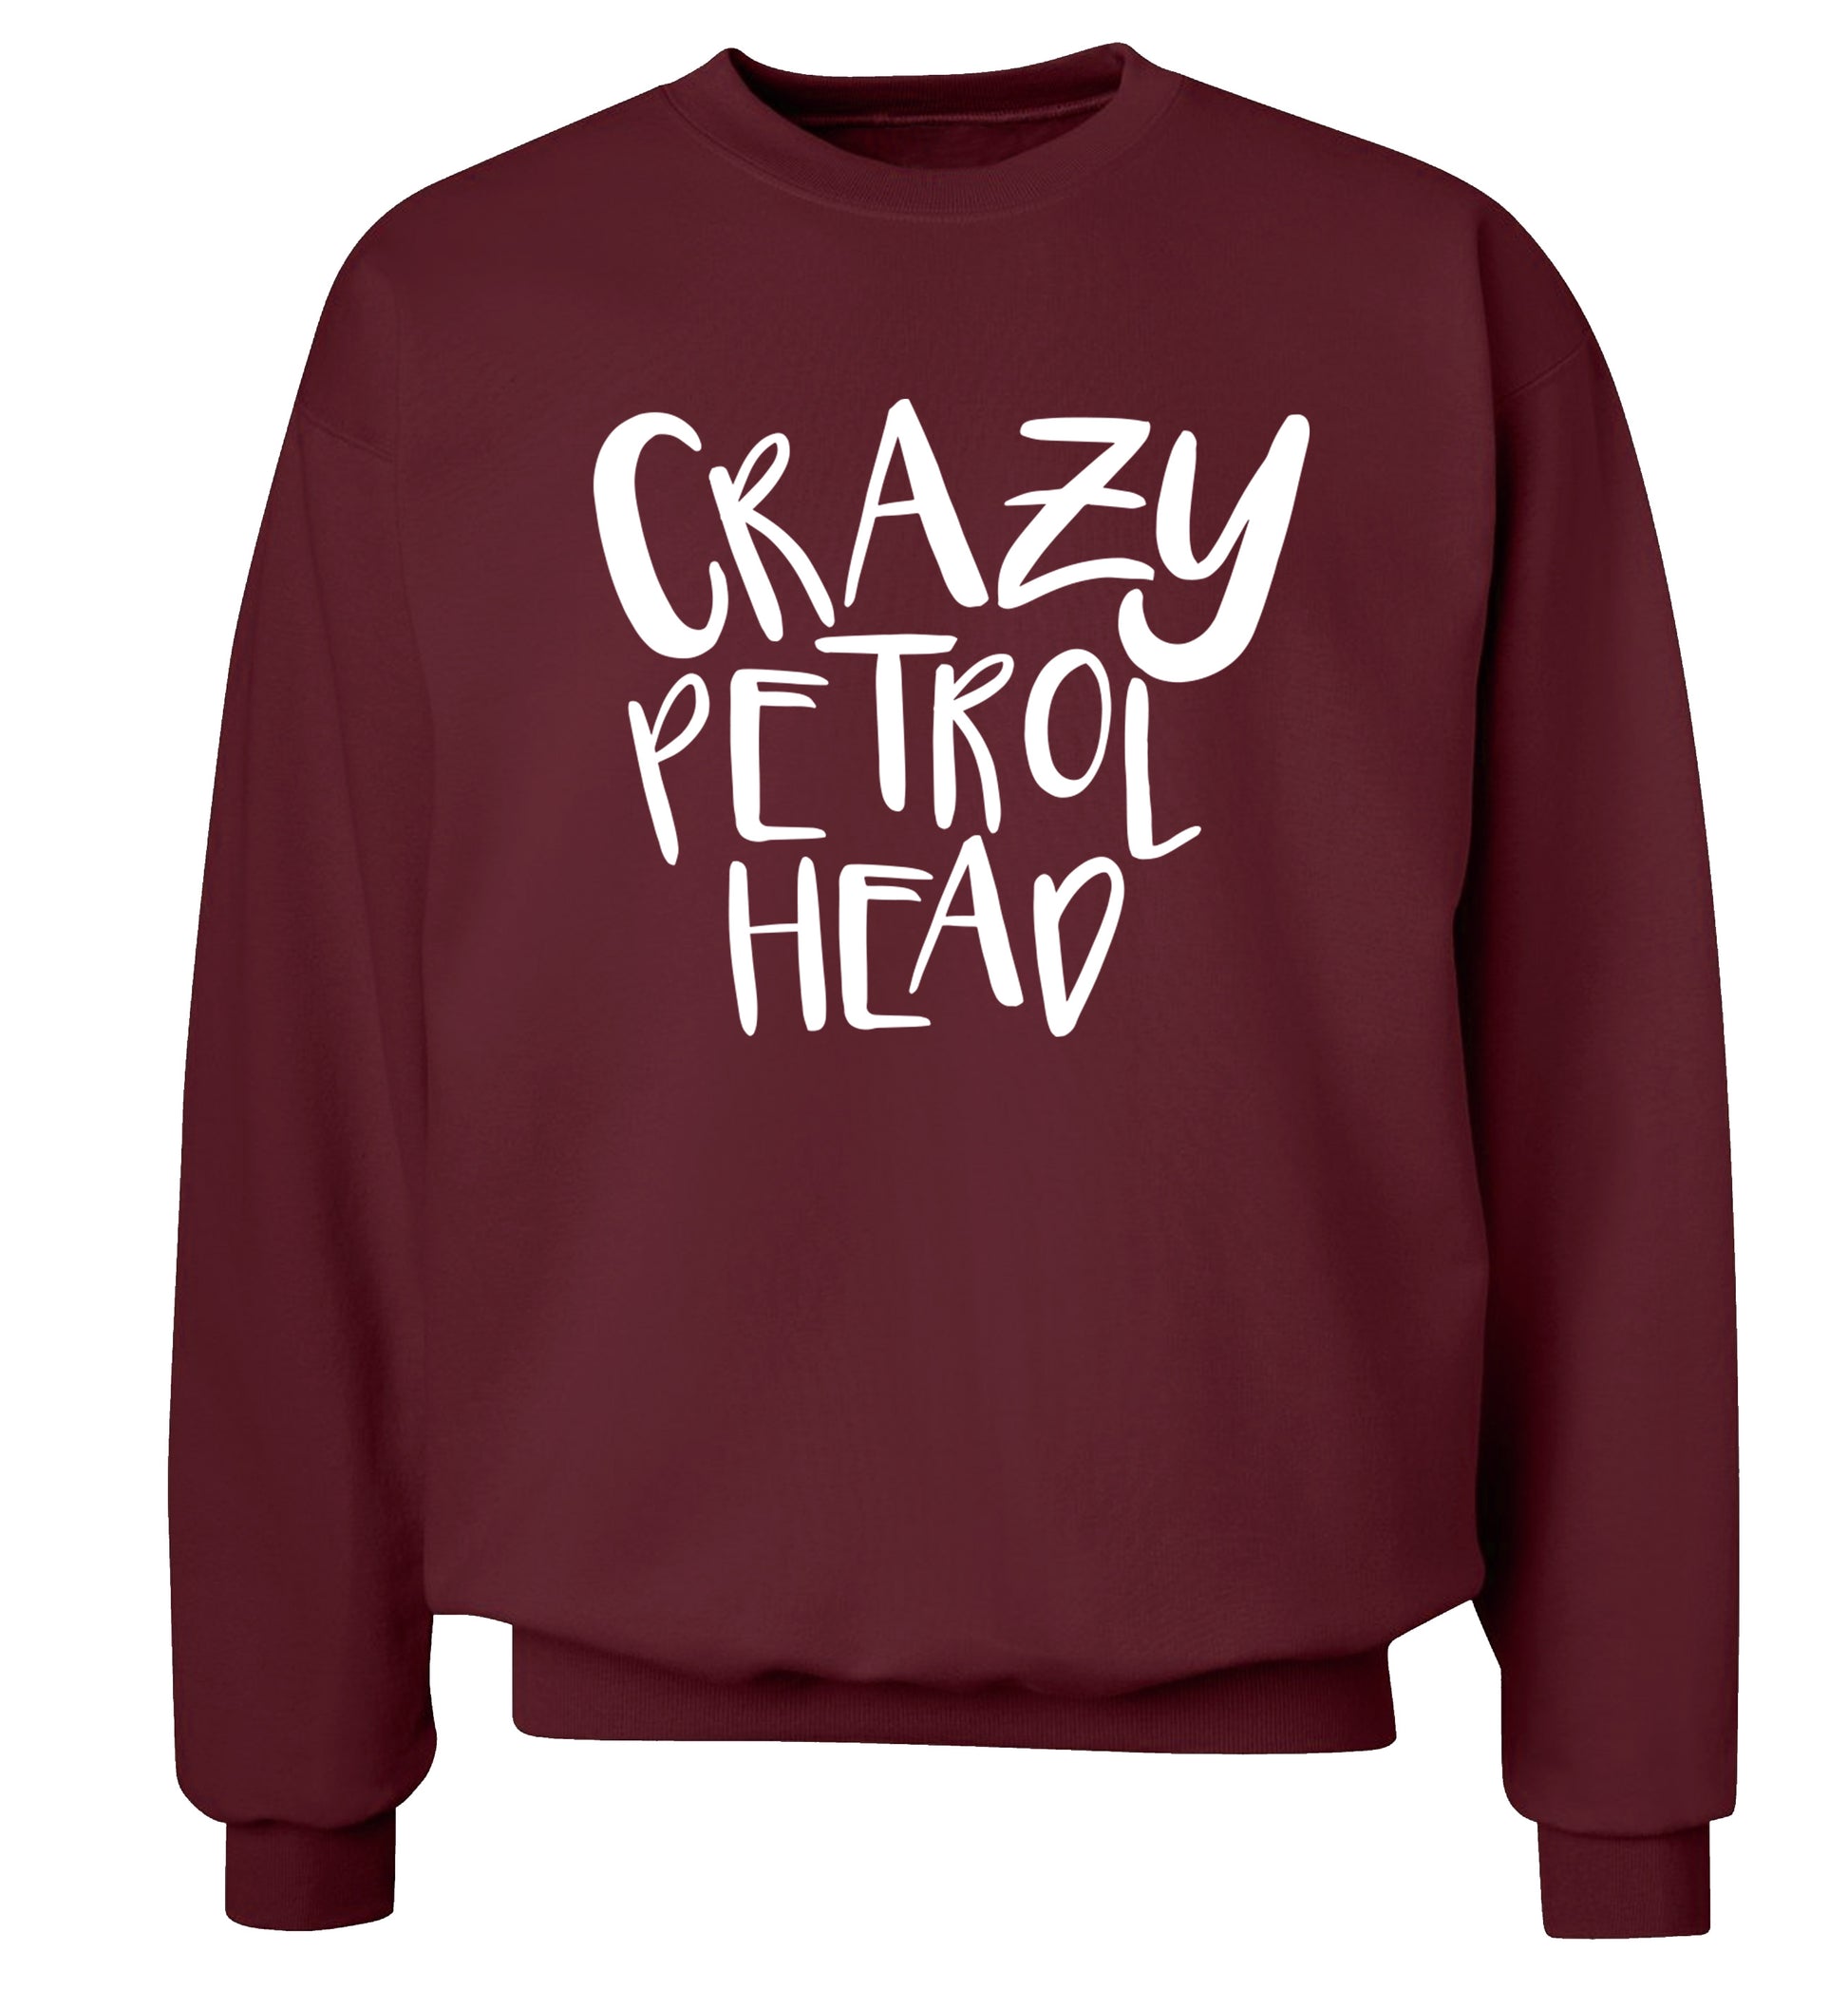 Crazy petrol head Adult's unisex maroon Sweater 2XL